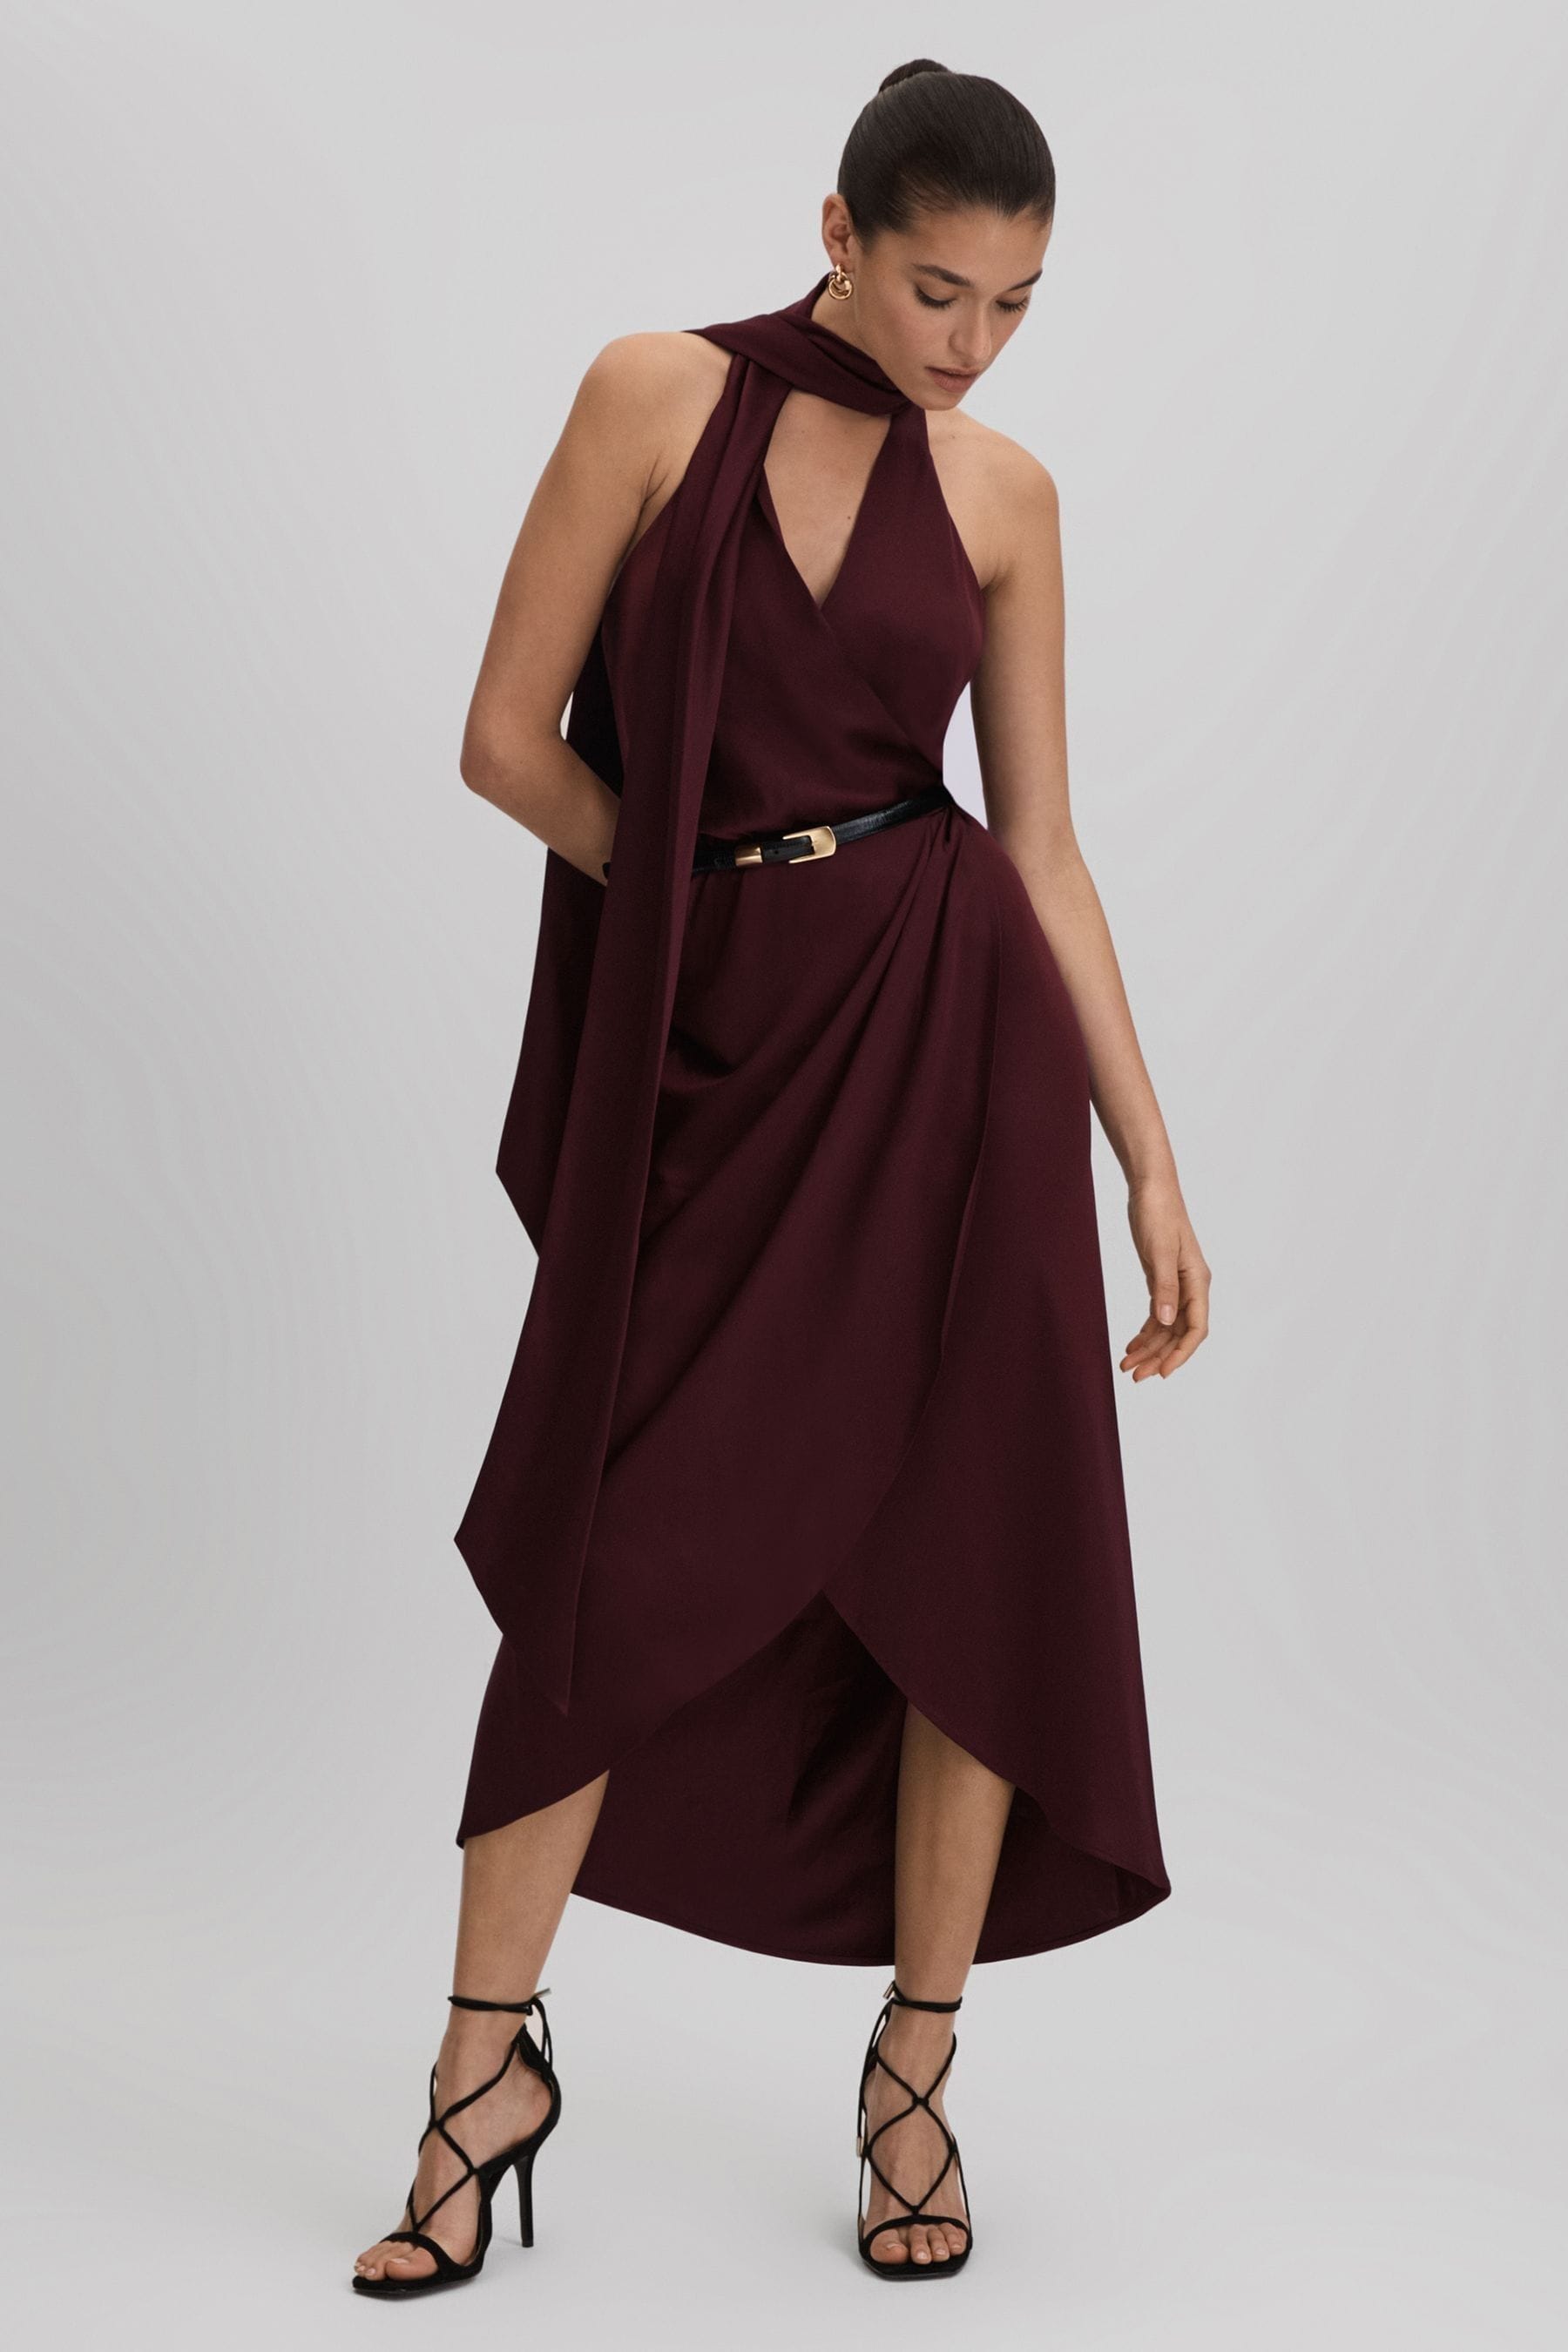 Reiss Tayla - Burgundy Satin Wrap Front Midi Dress, Us 10